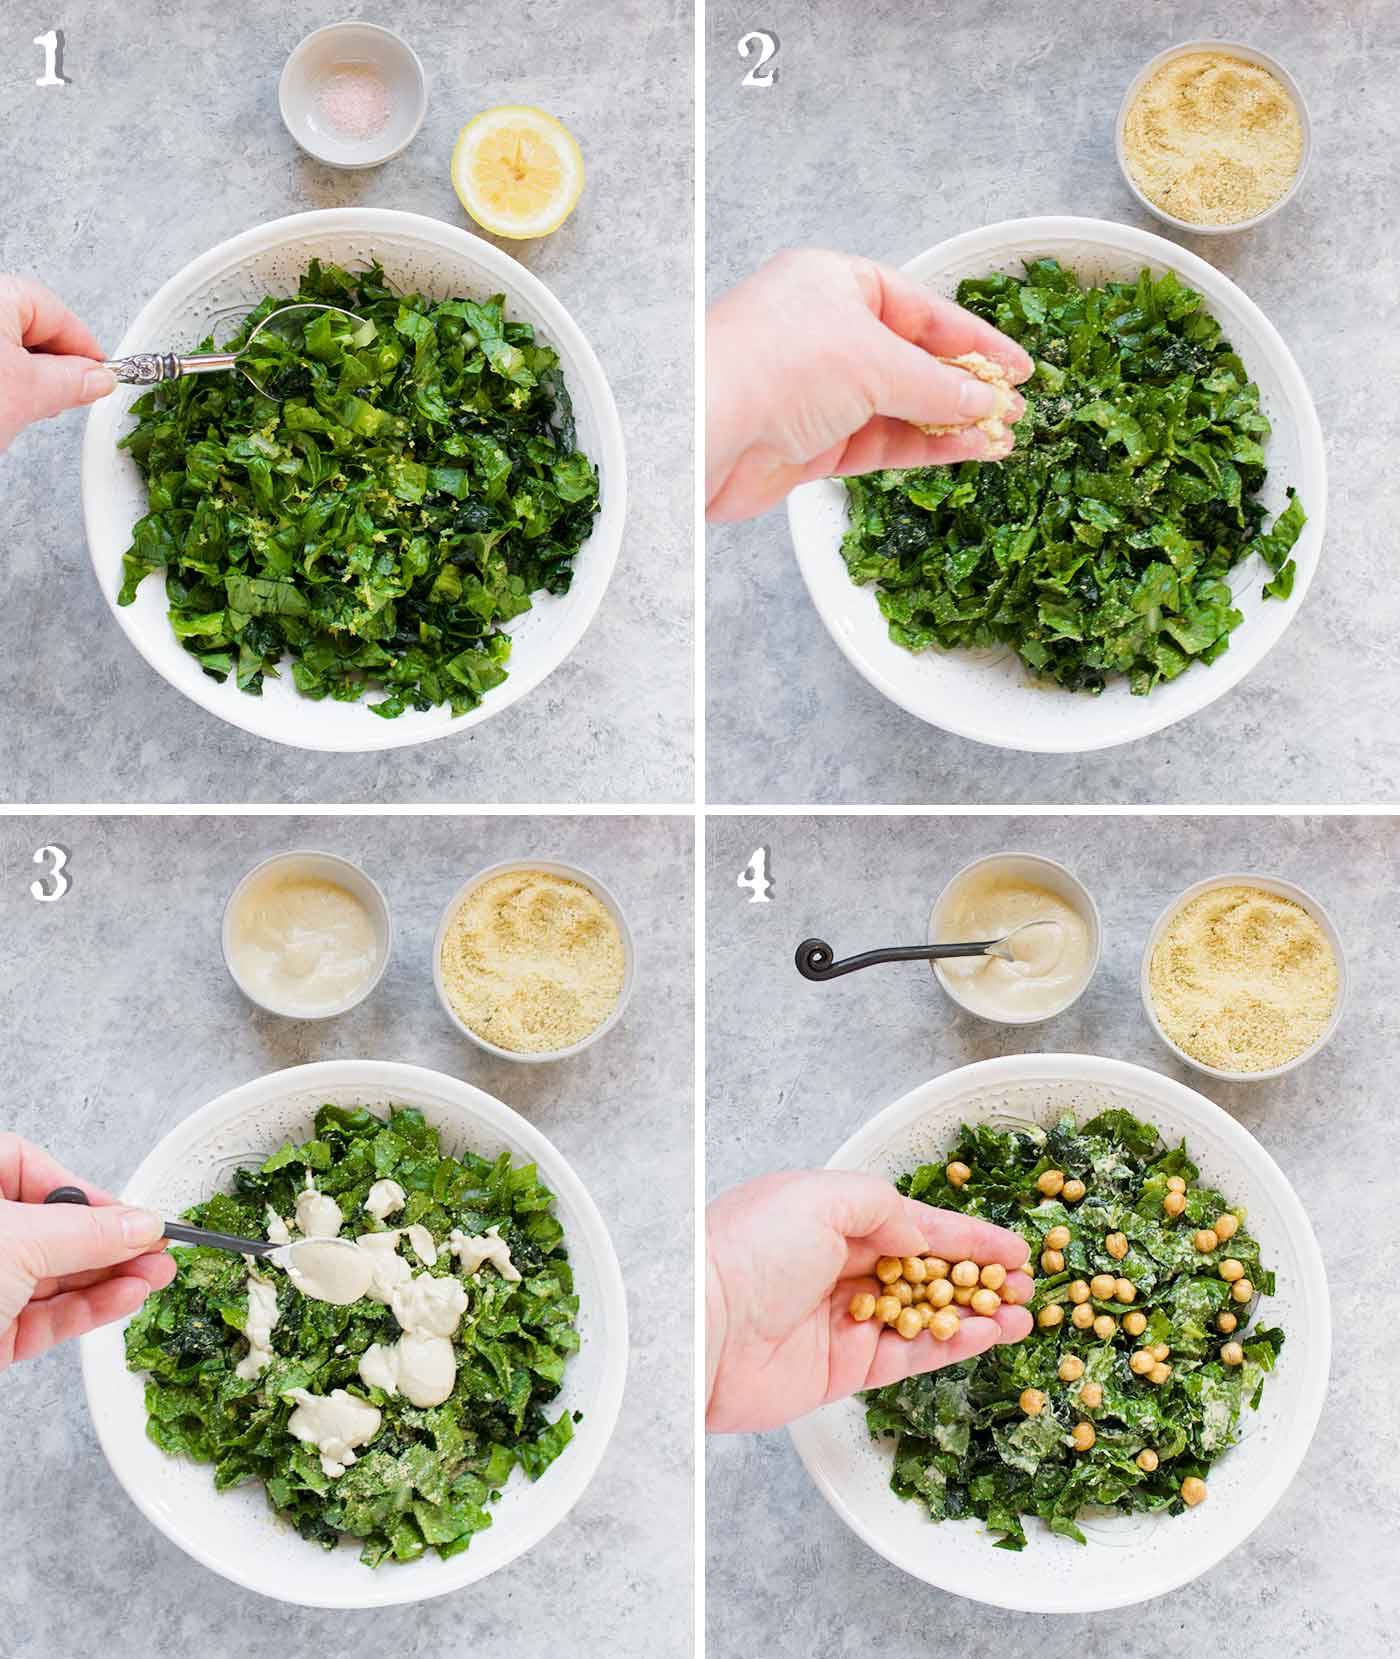 Step by step: How to make a vegan caesar salad.